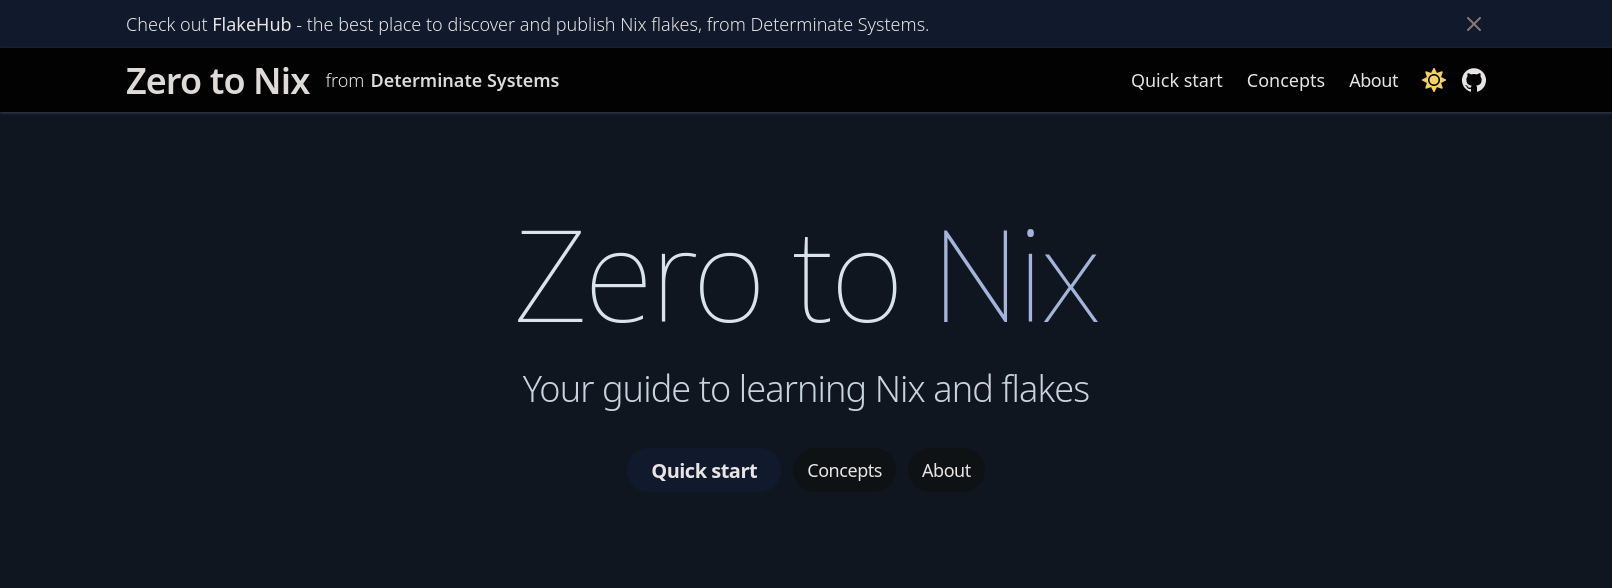 zero to nix landing page